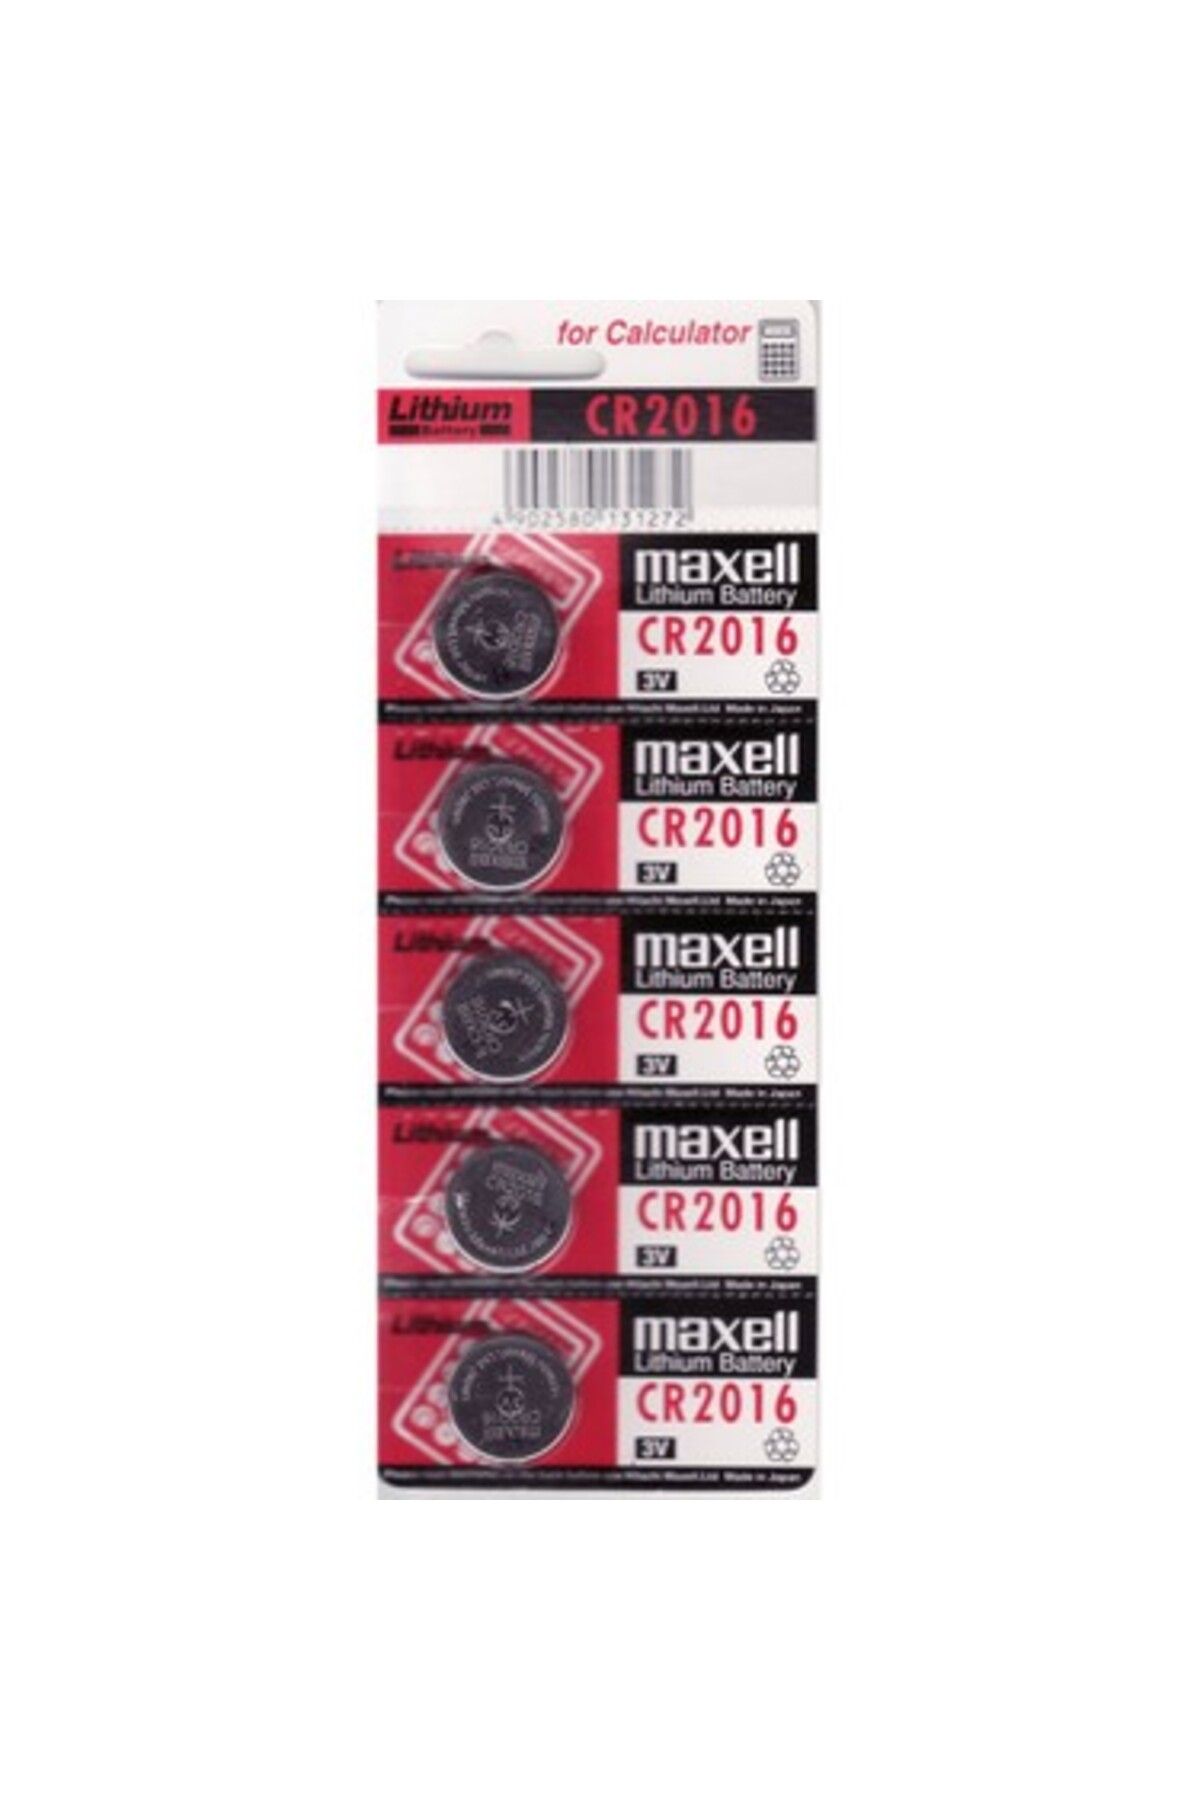 KRGZ 2020 Maxell Cr2016 3v Lityum Düğme Pil 5'li Paket